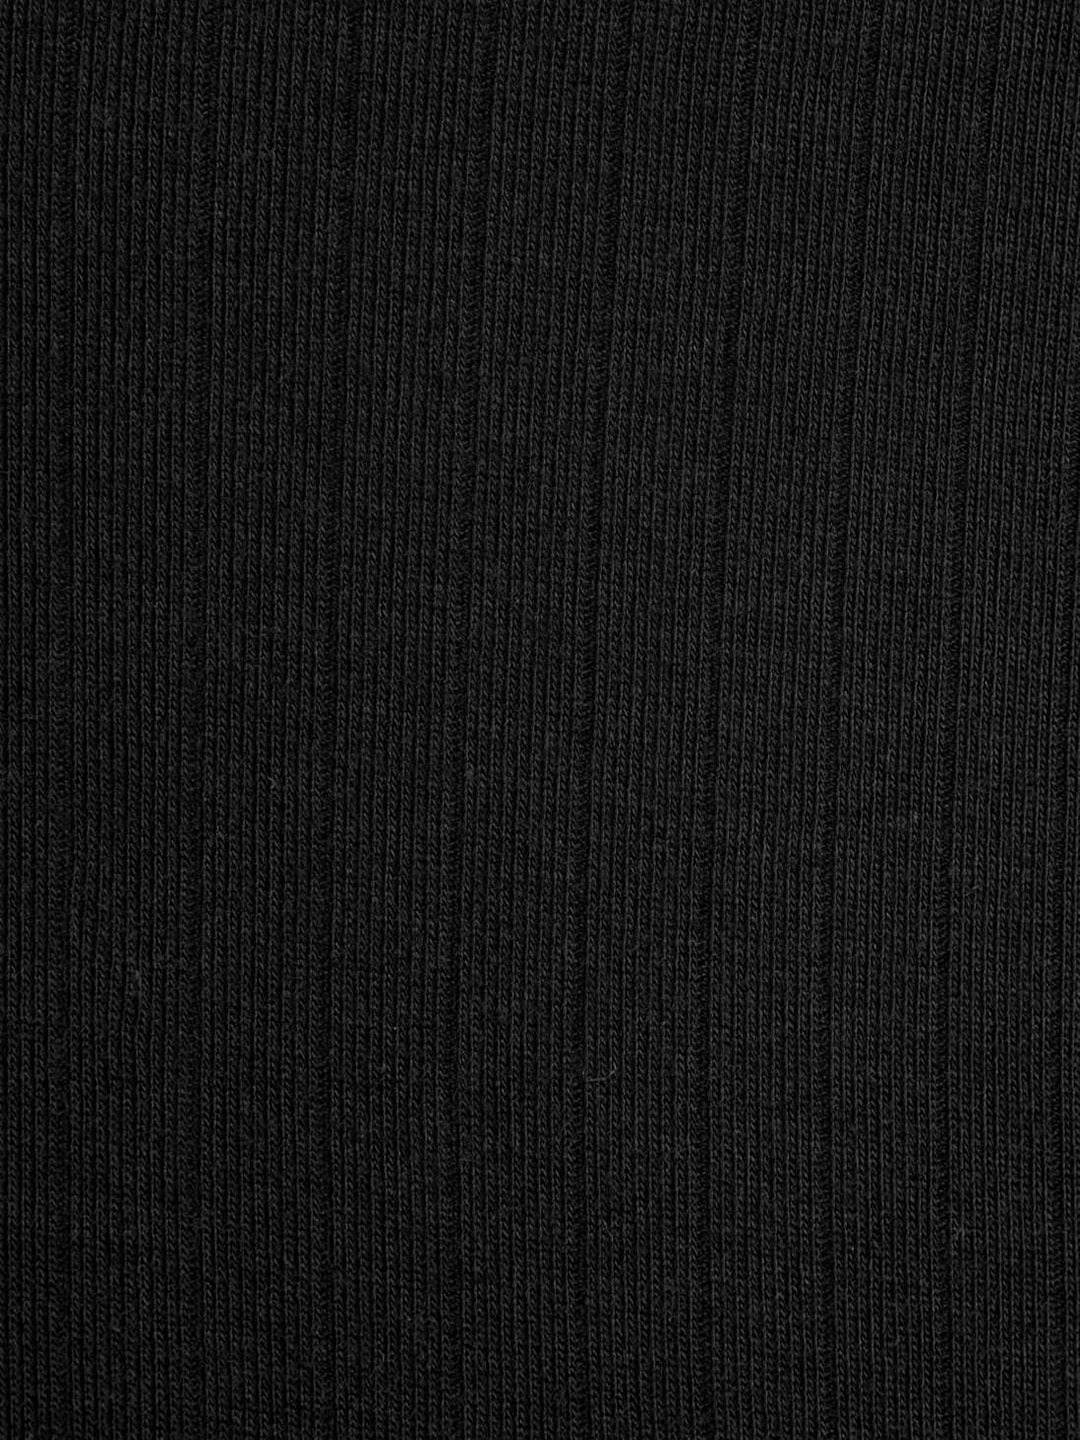 Clothing Innerwear Vests | Jockey Men Black Solid Innerwear Vests - MI16033